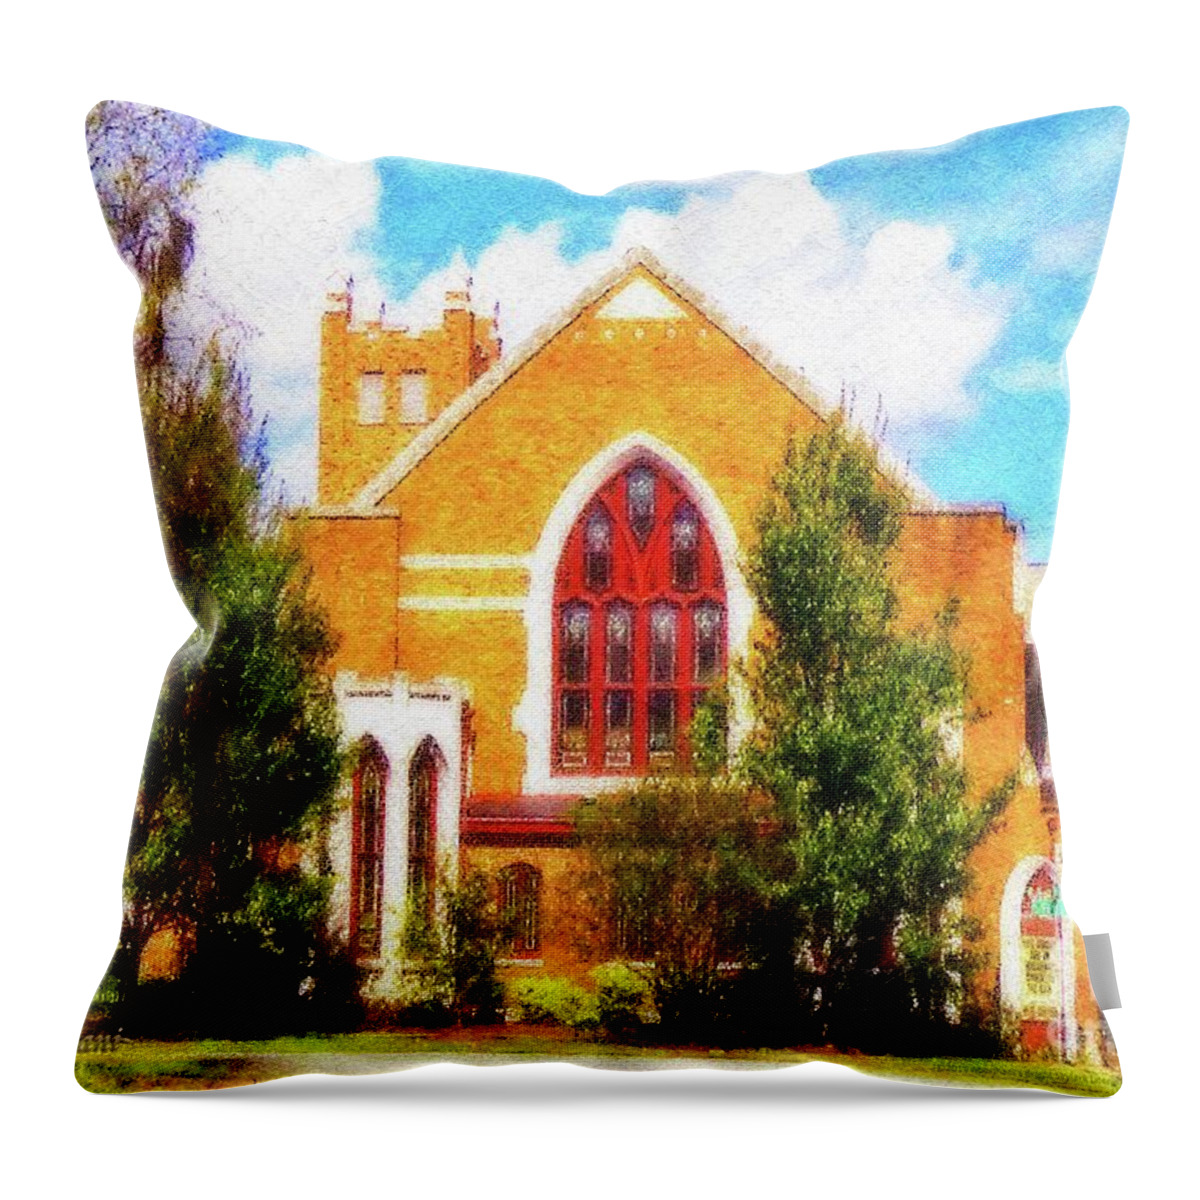 American Churches Throw Pillow featuring the digital art Sunny Asbury Day by Aberjhani